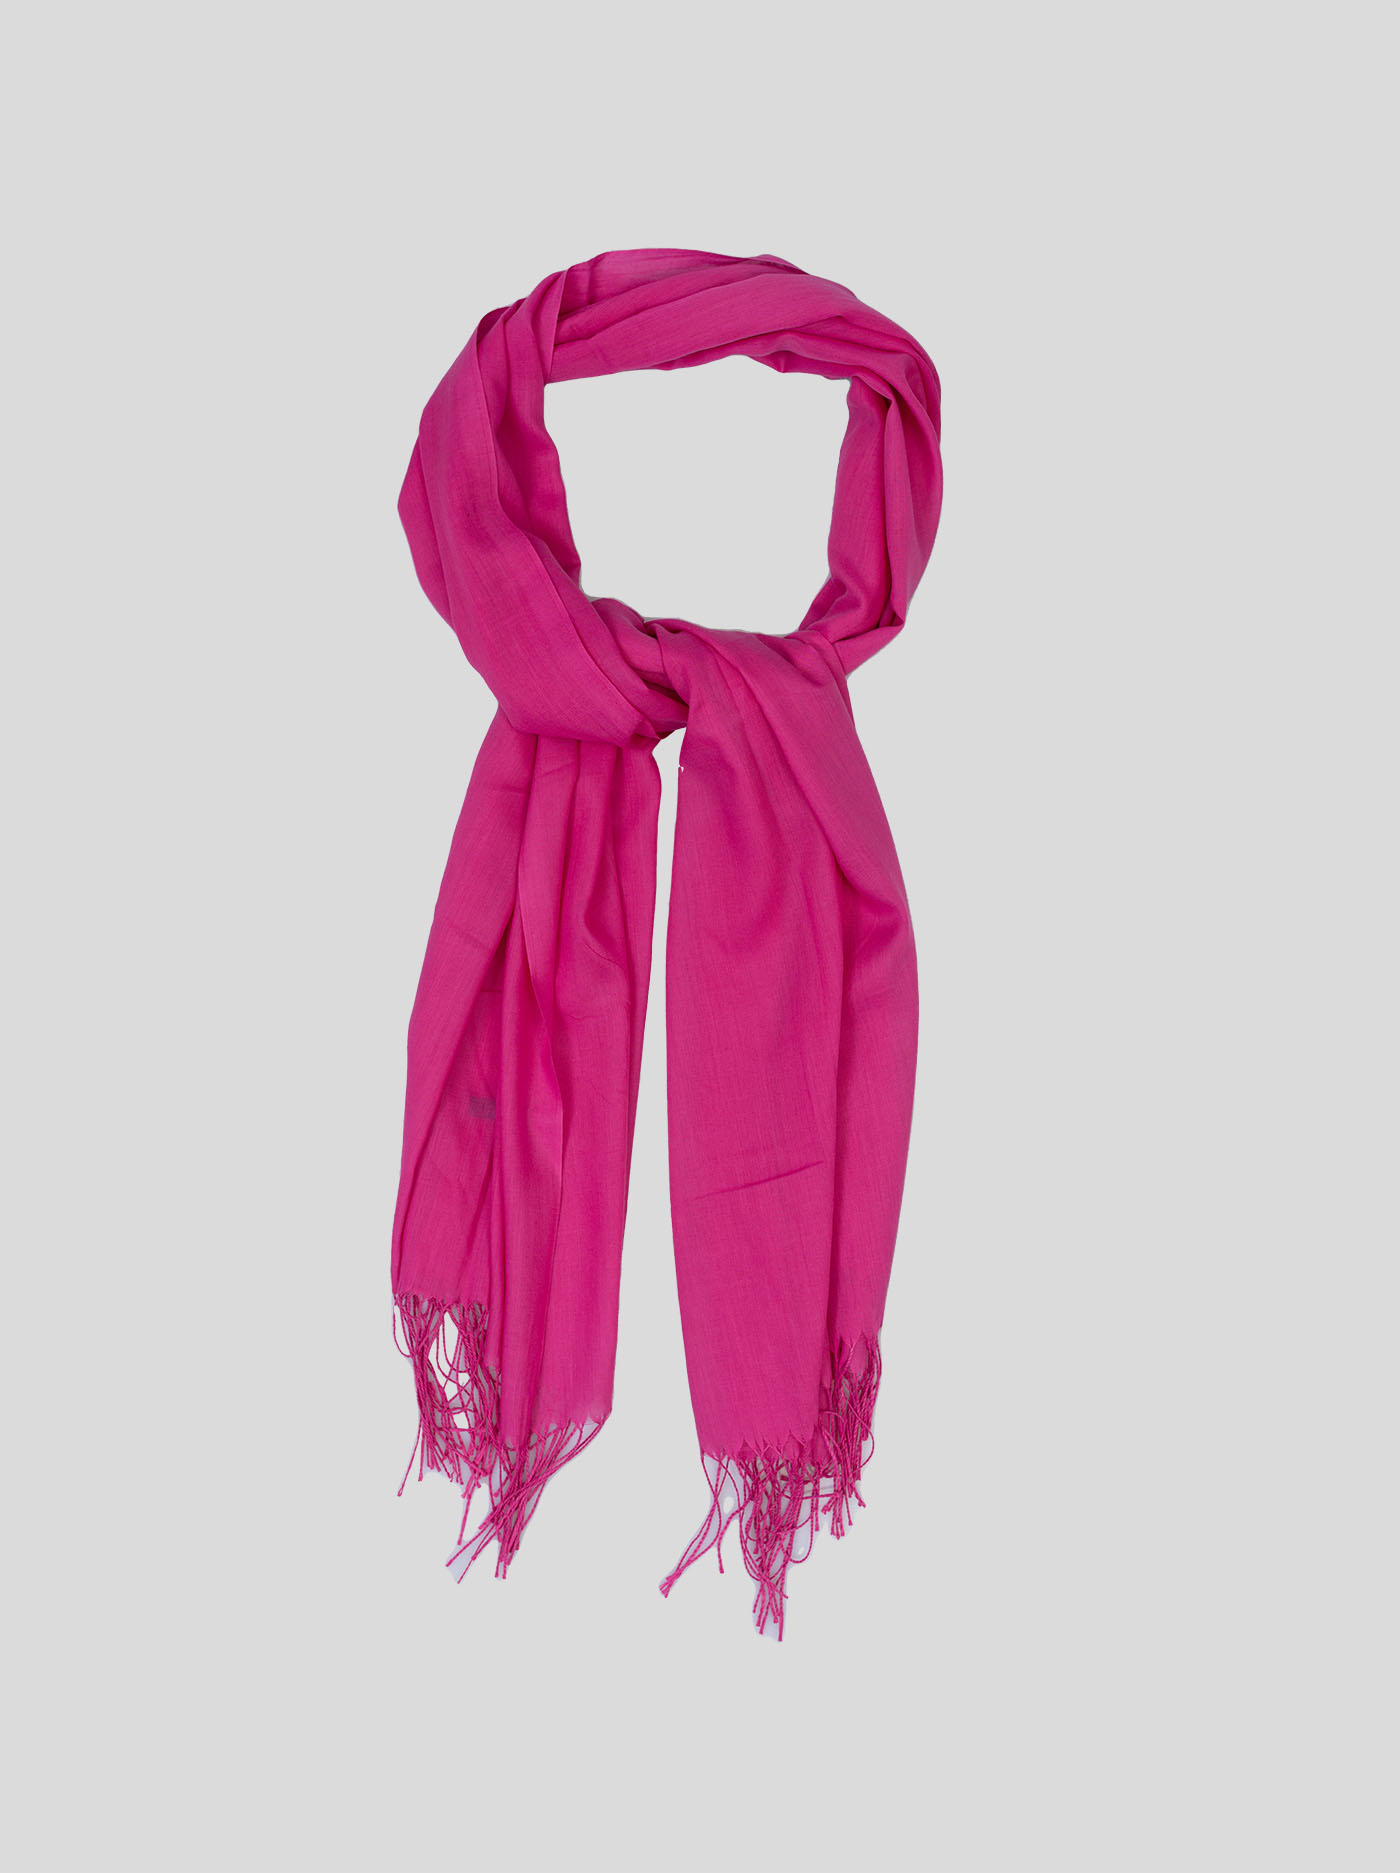 Pink scarf image 1